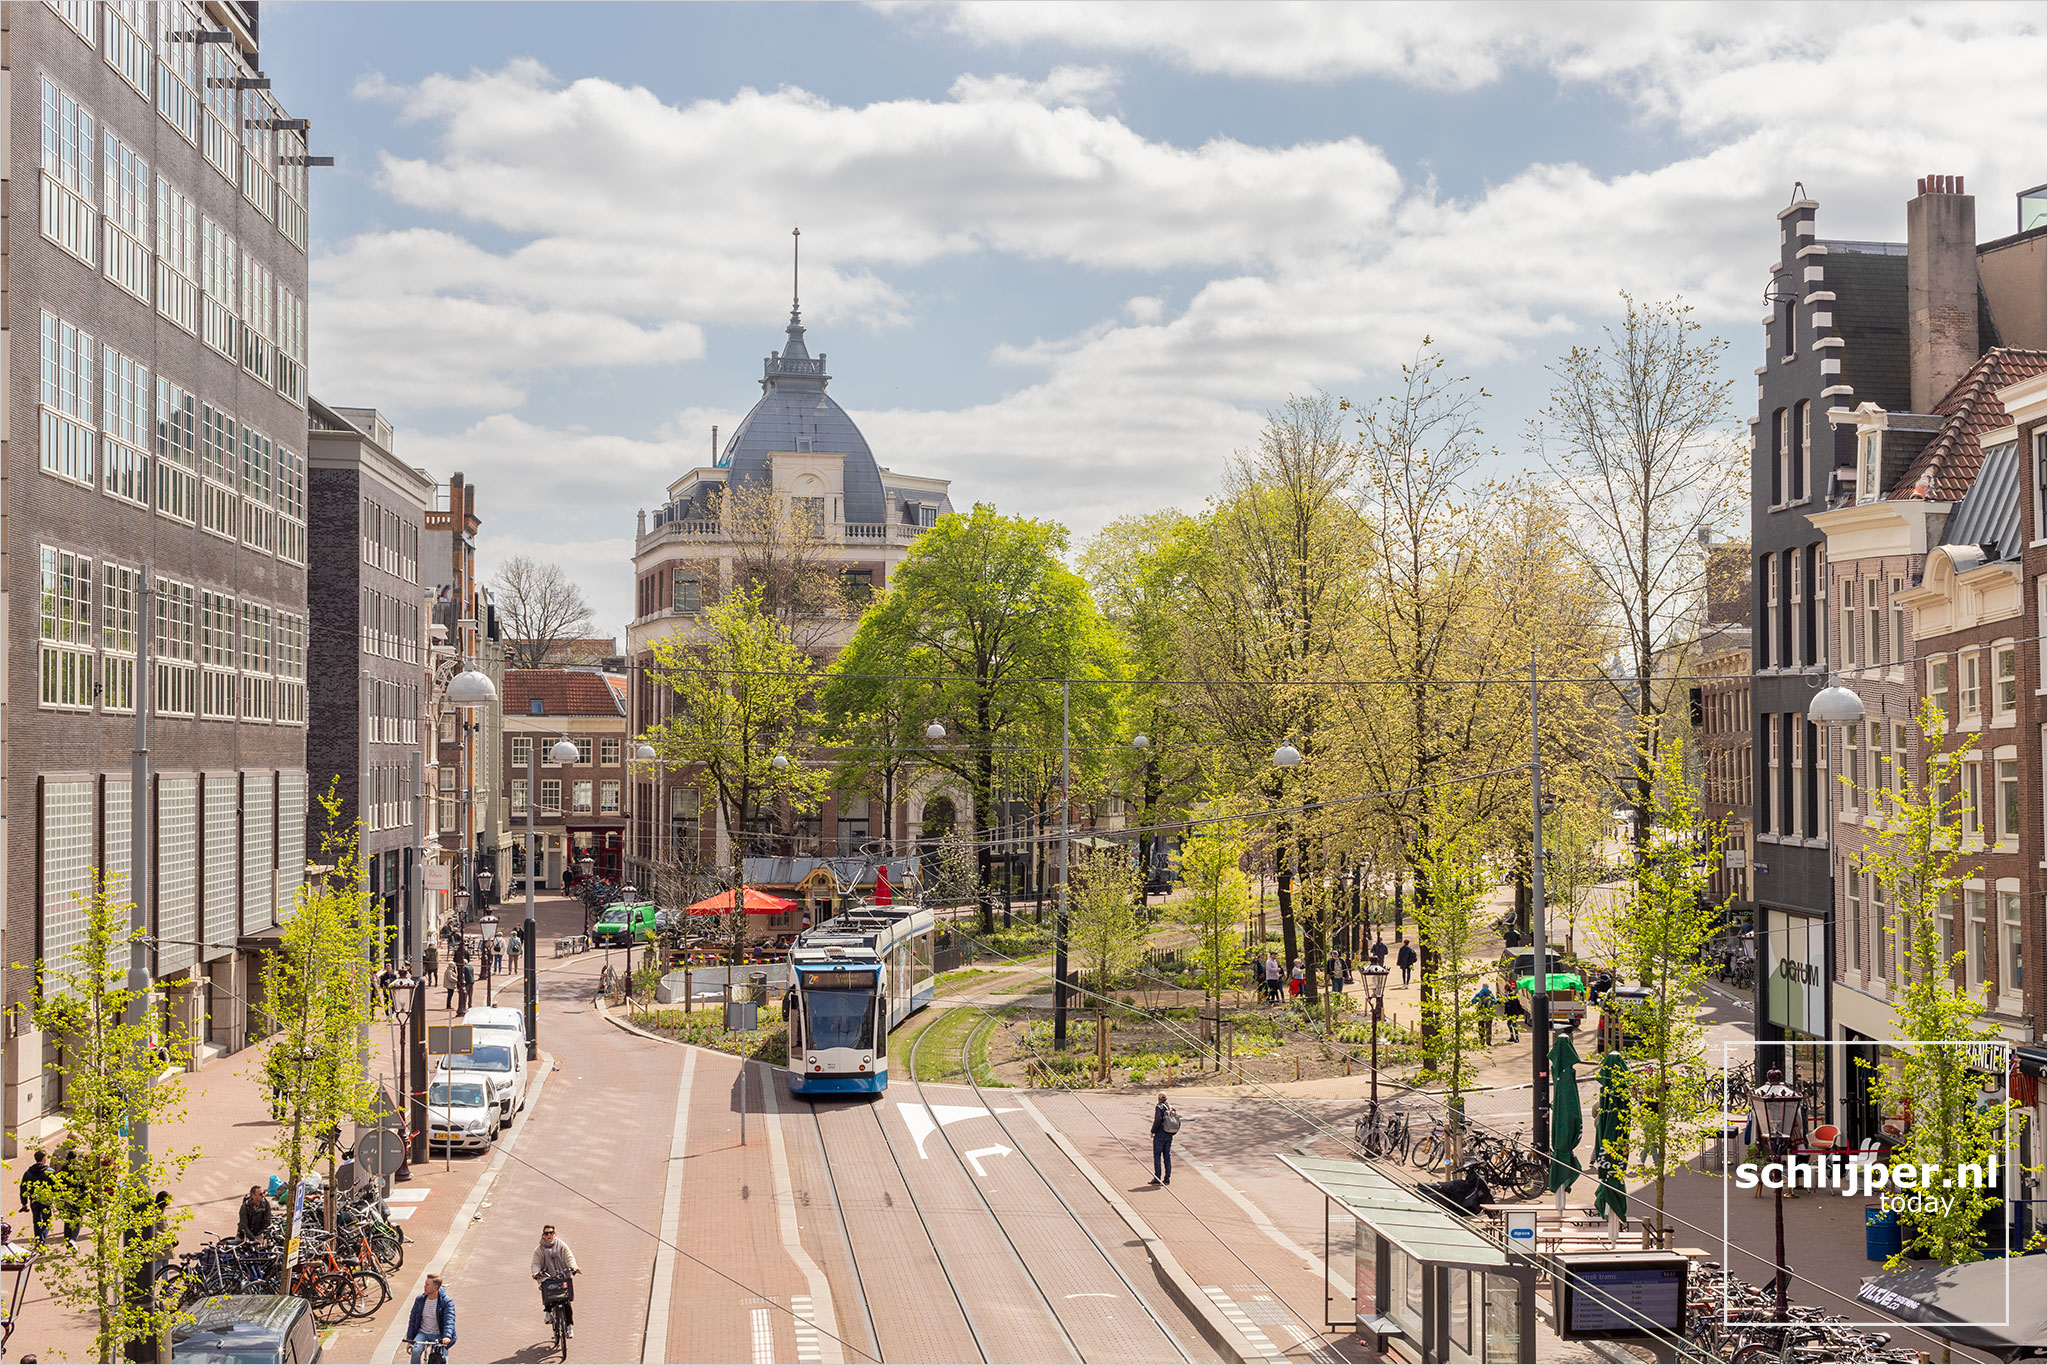 The Netherlands, Amsterdam, 2 mei 2023